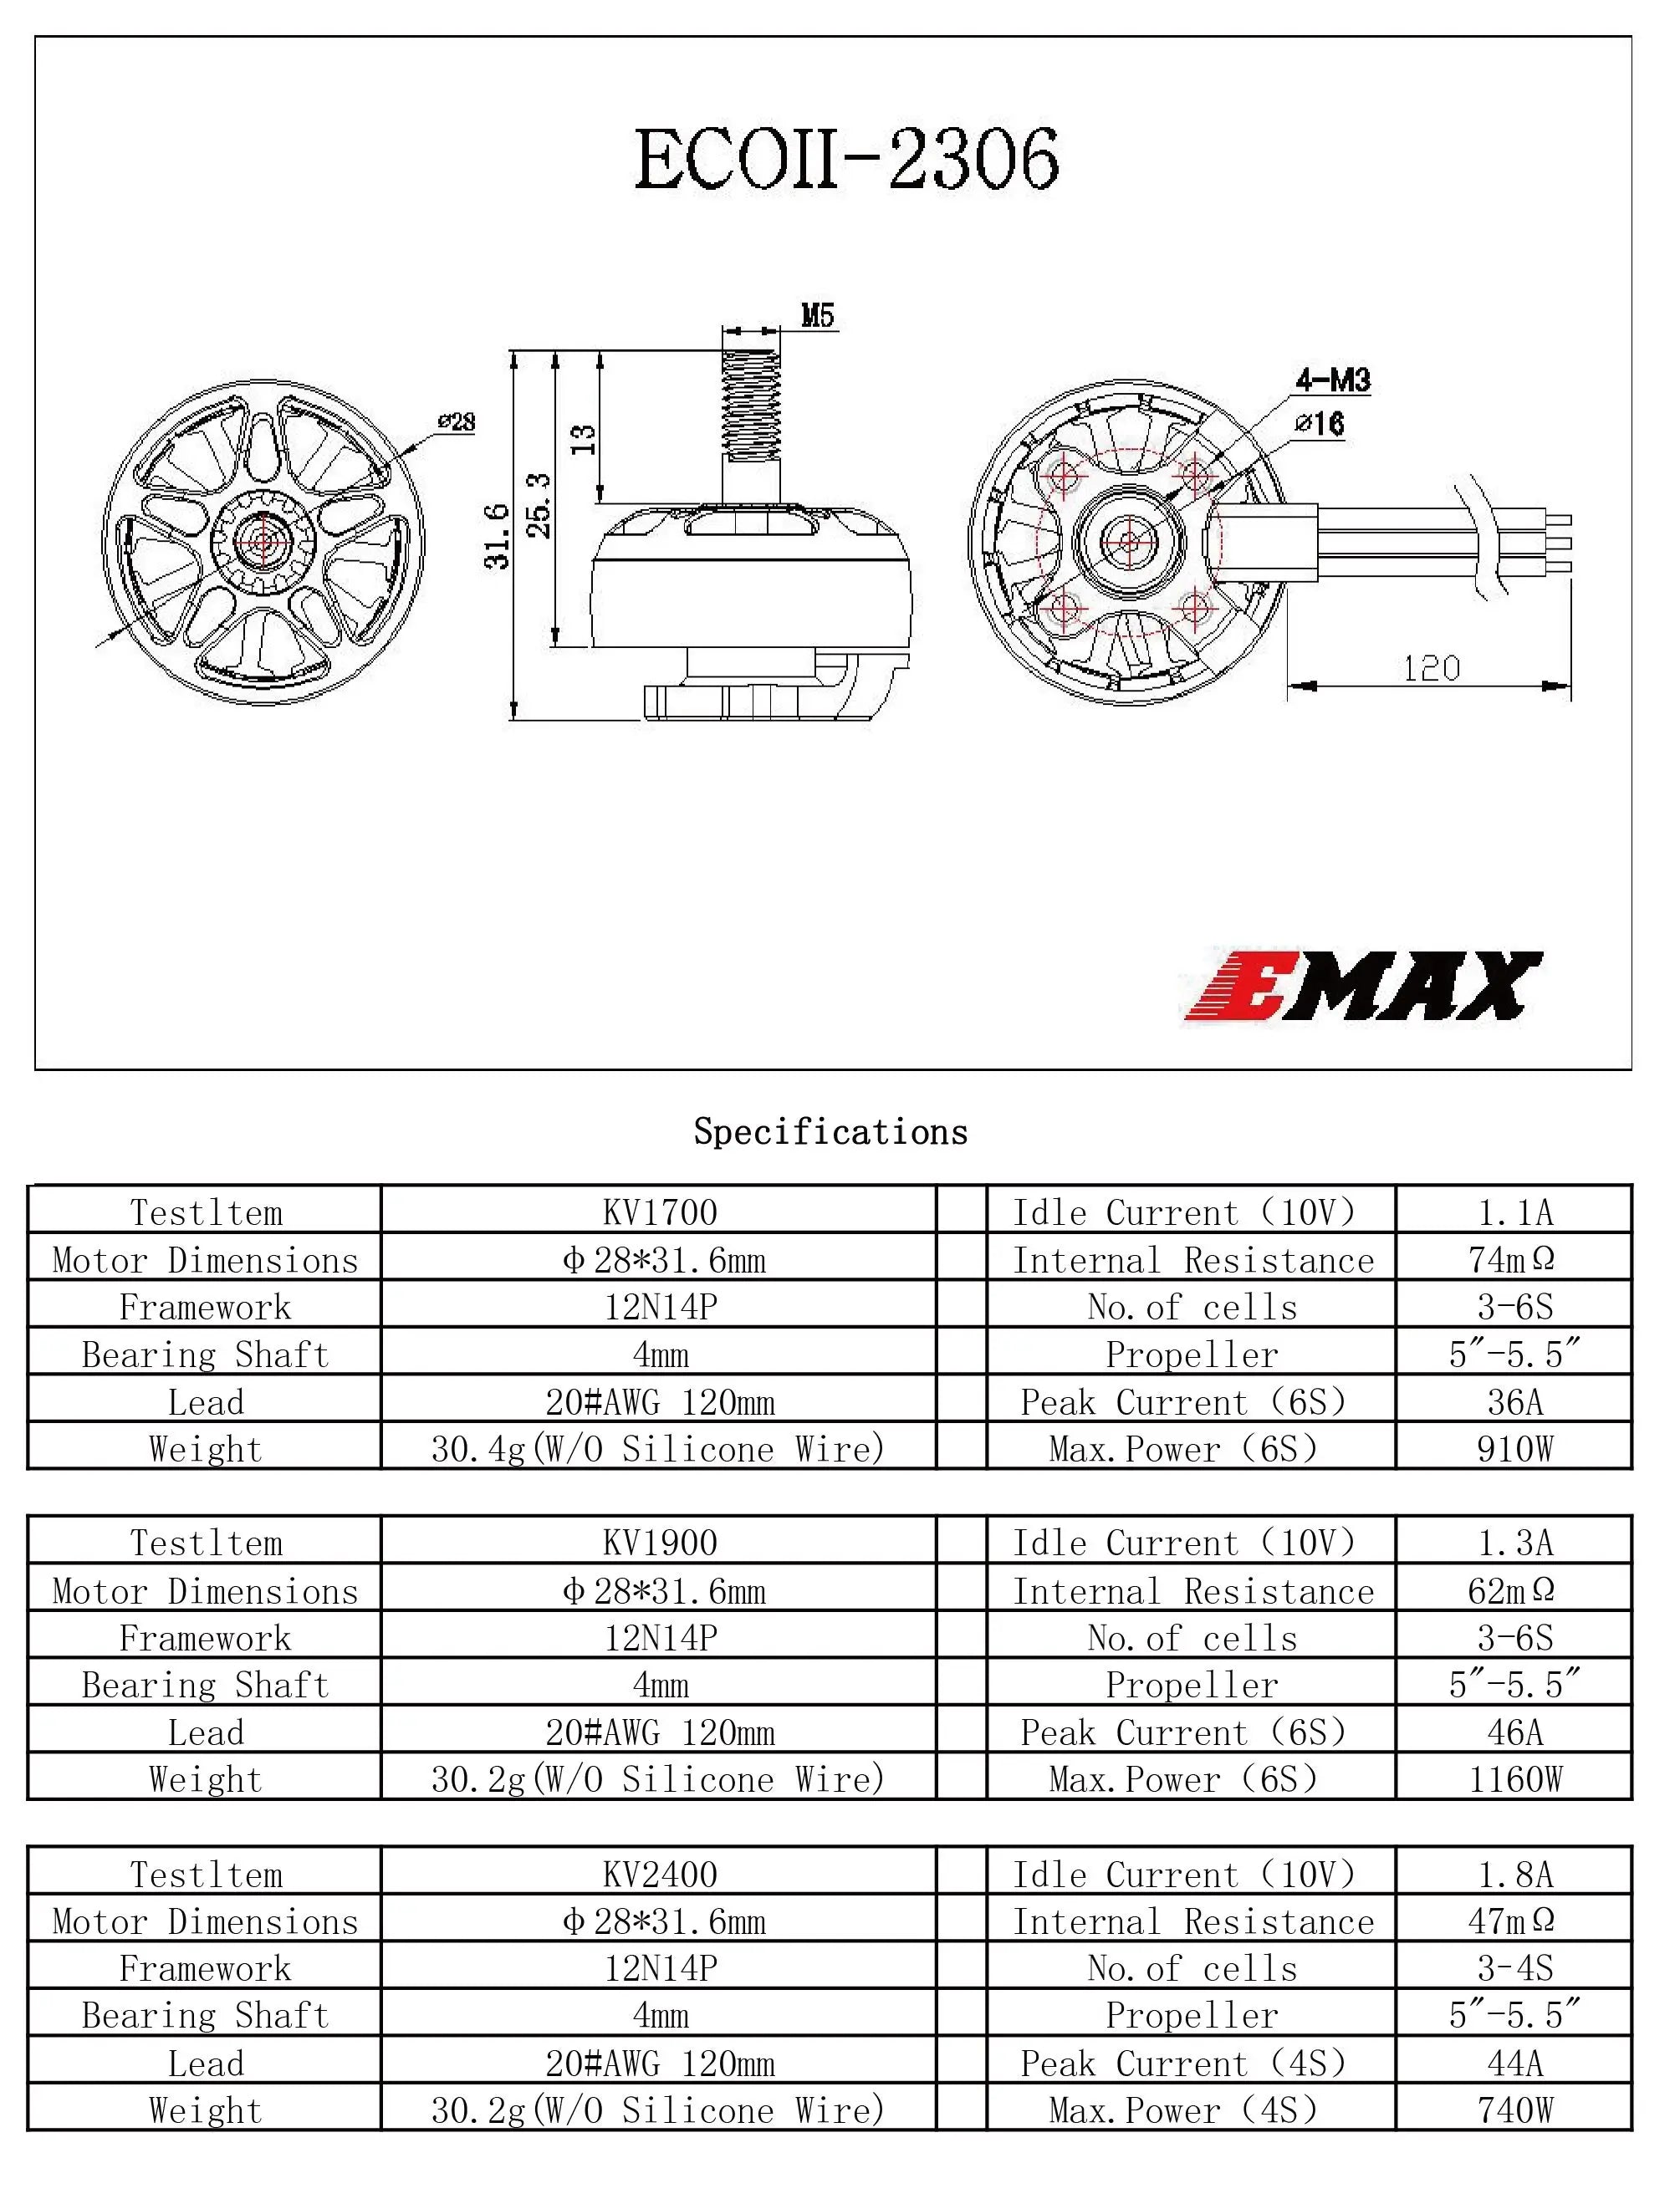 Emax ECO II 2306 Motor, 6mm Internal Resistance 74m Q Framework 12N14P Noof cells 3-6S